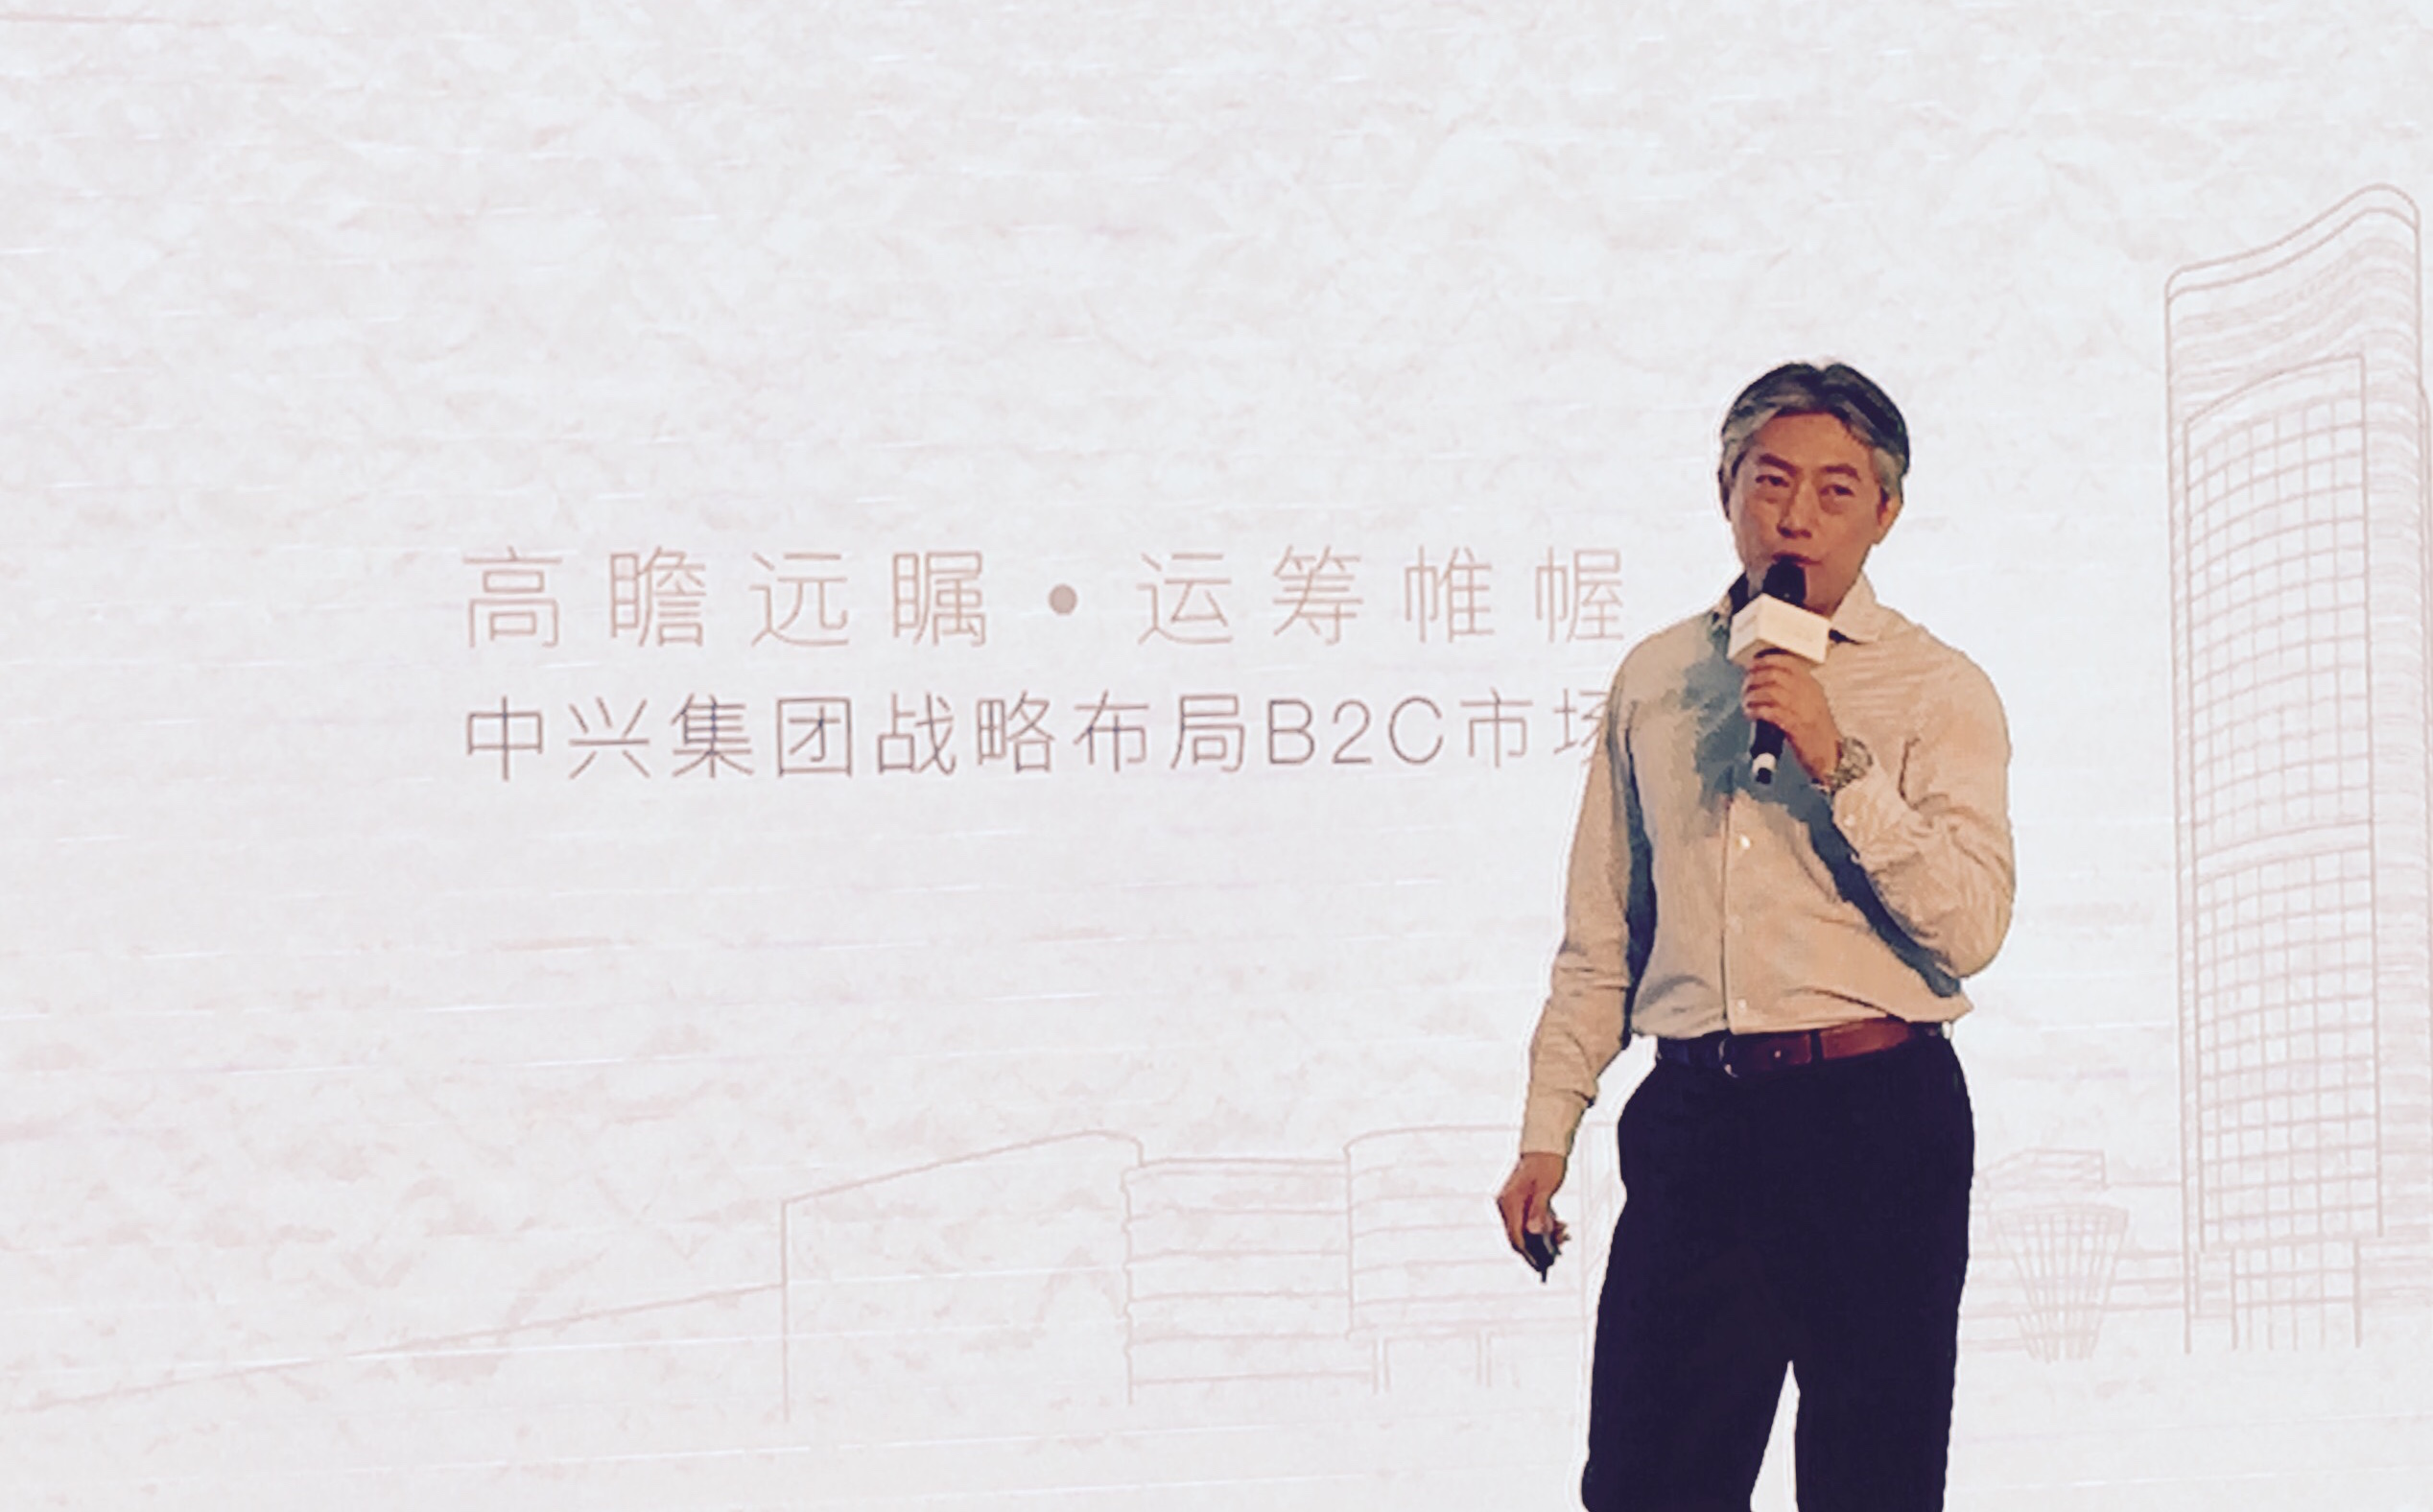 Nubia Technology president Li Qiang announces the company's rebranding at an event in Beijing. Photo: Wu Nan